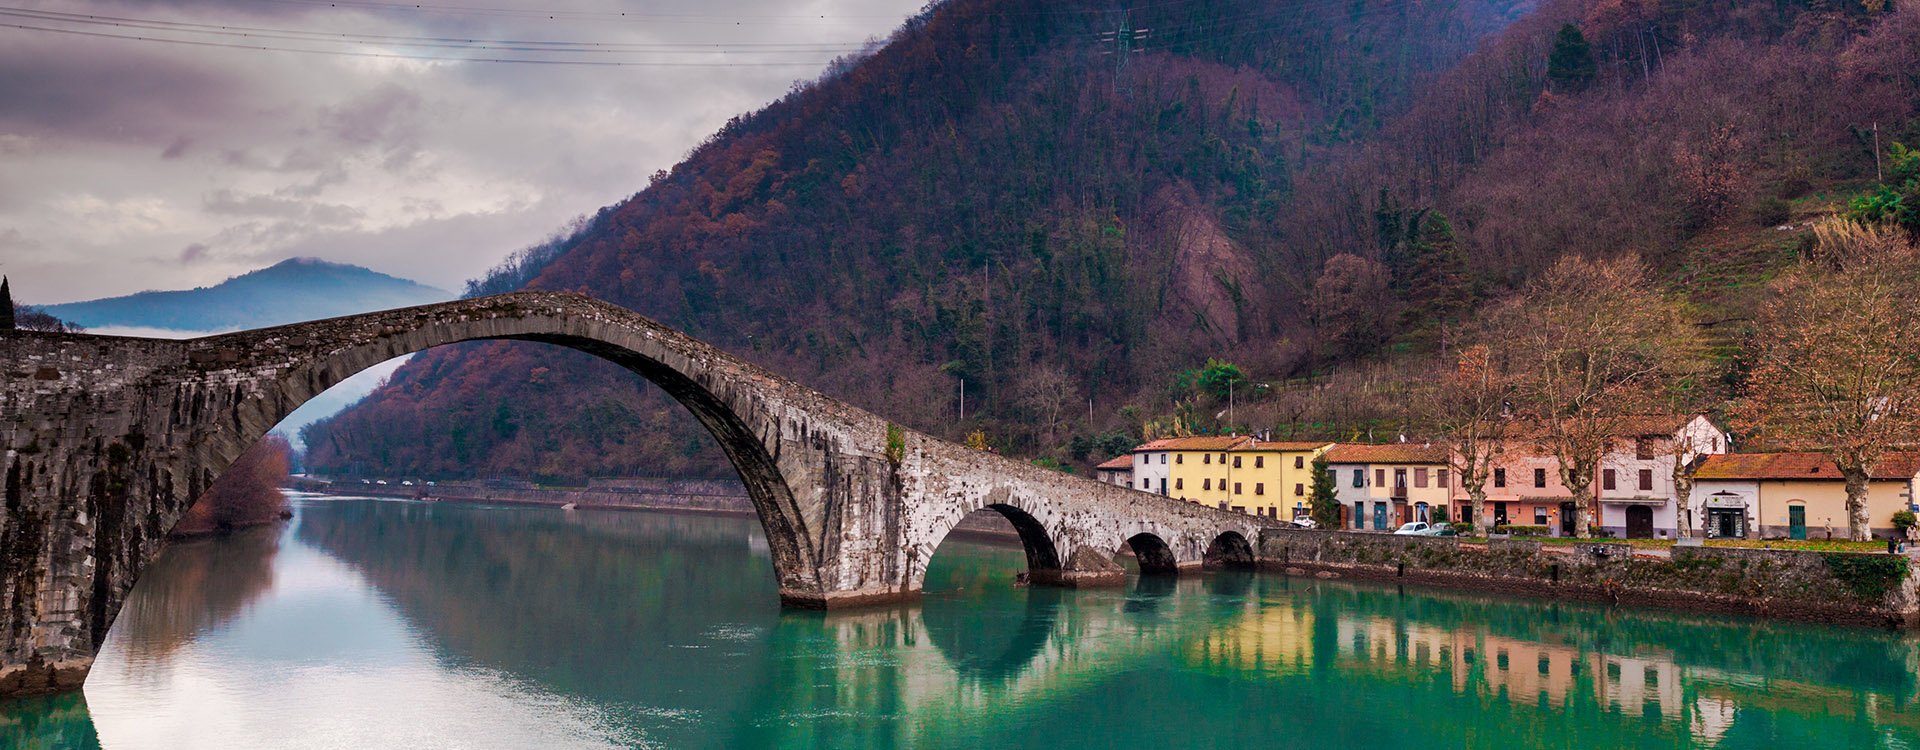 Maddalena Bridge over the Serchio river in Lucca Tuscany italy